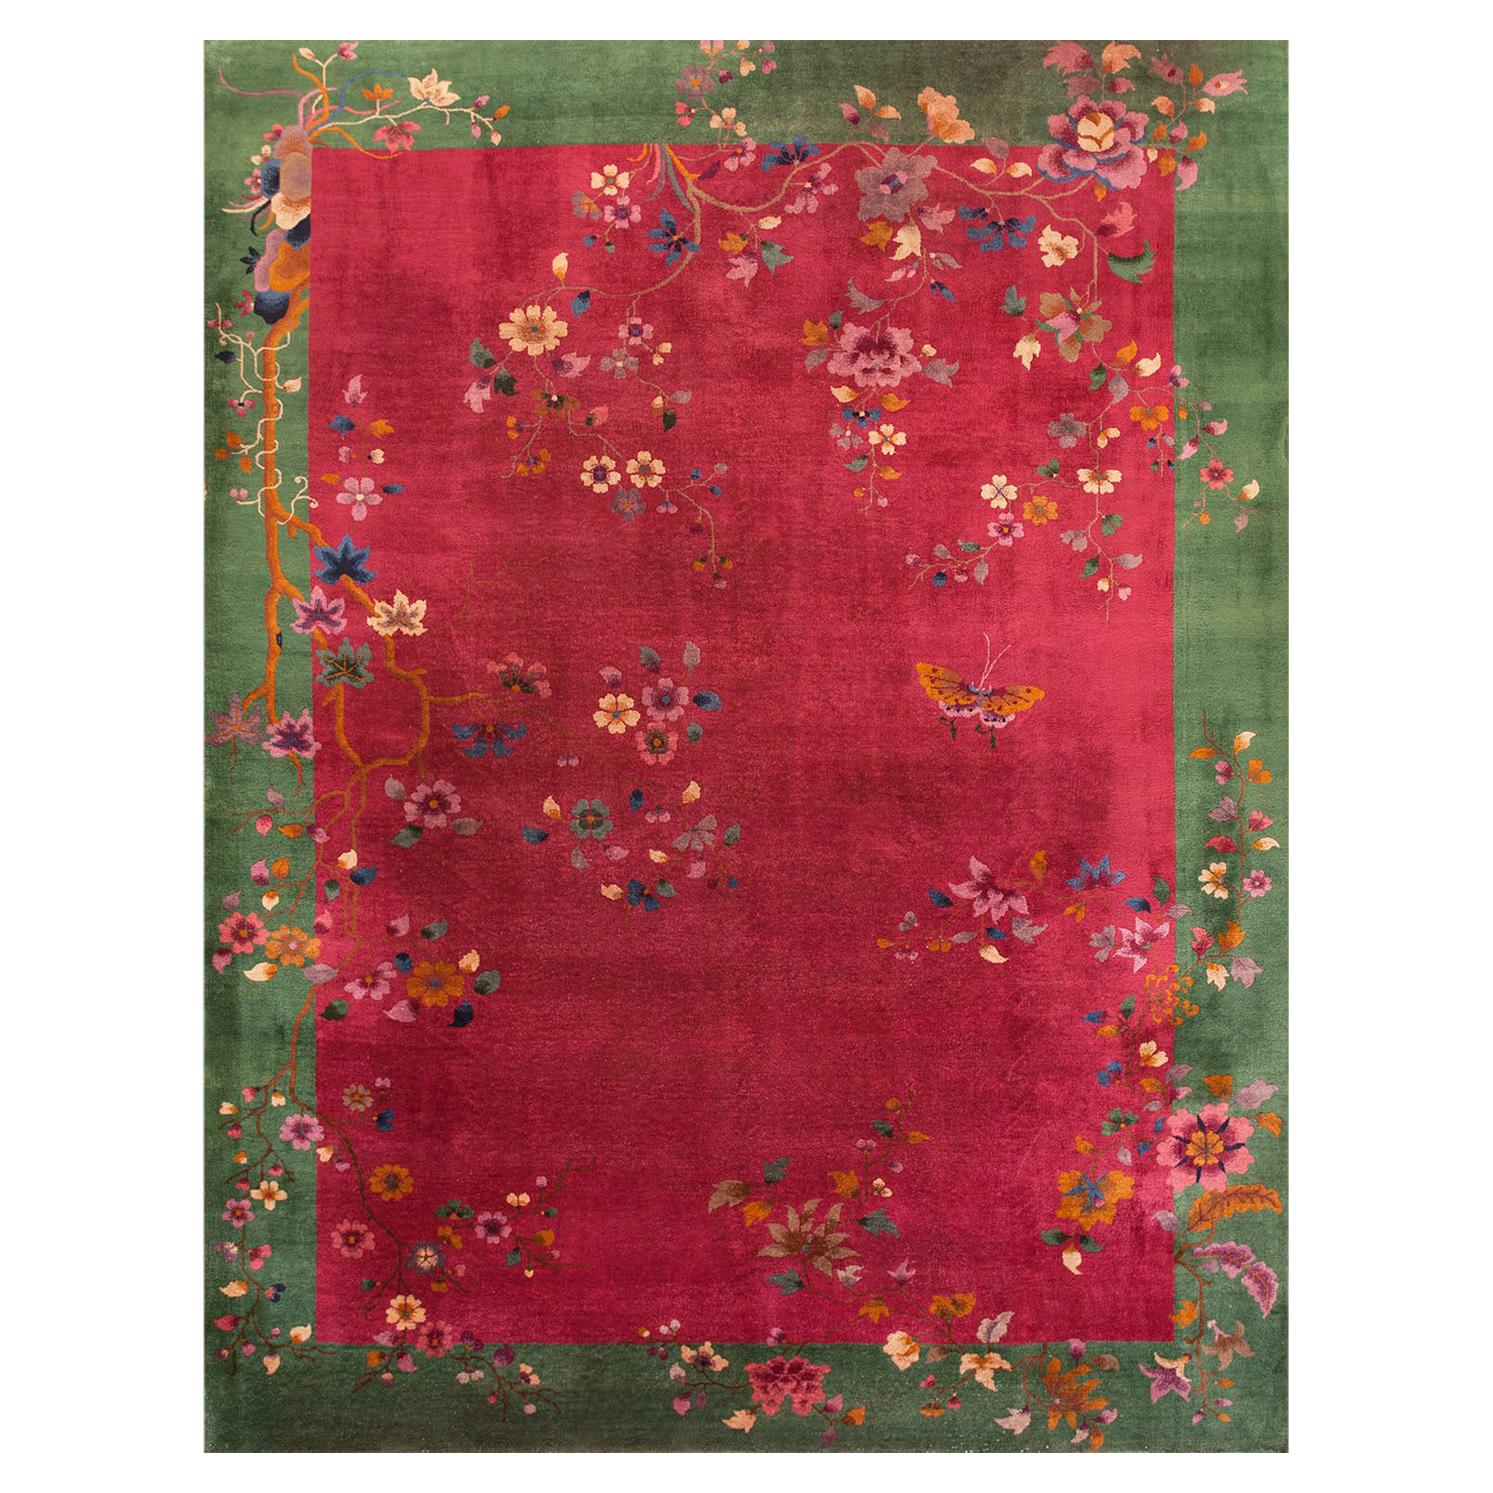 1920s Chinese Art Deco Carpet ( 9' x 11'8" - 275 x 355 cm )